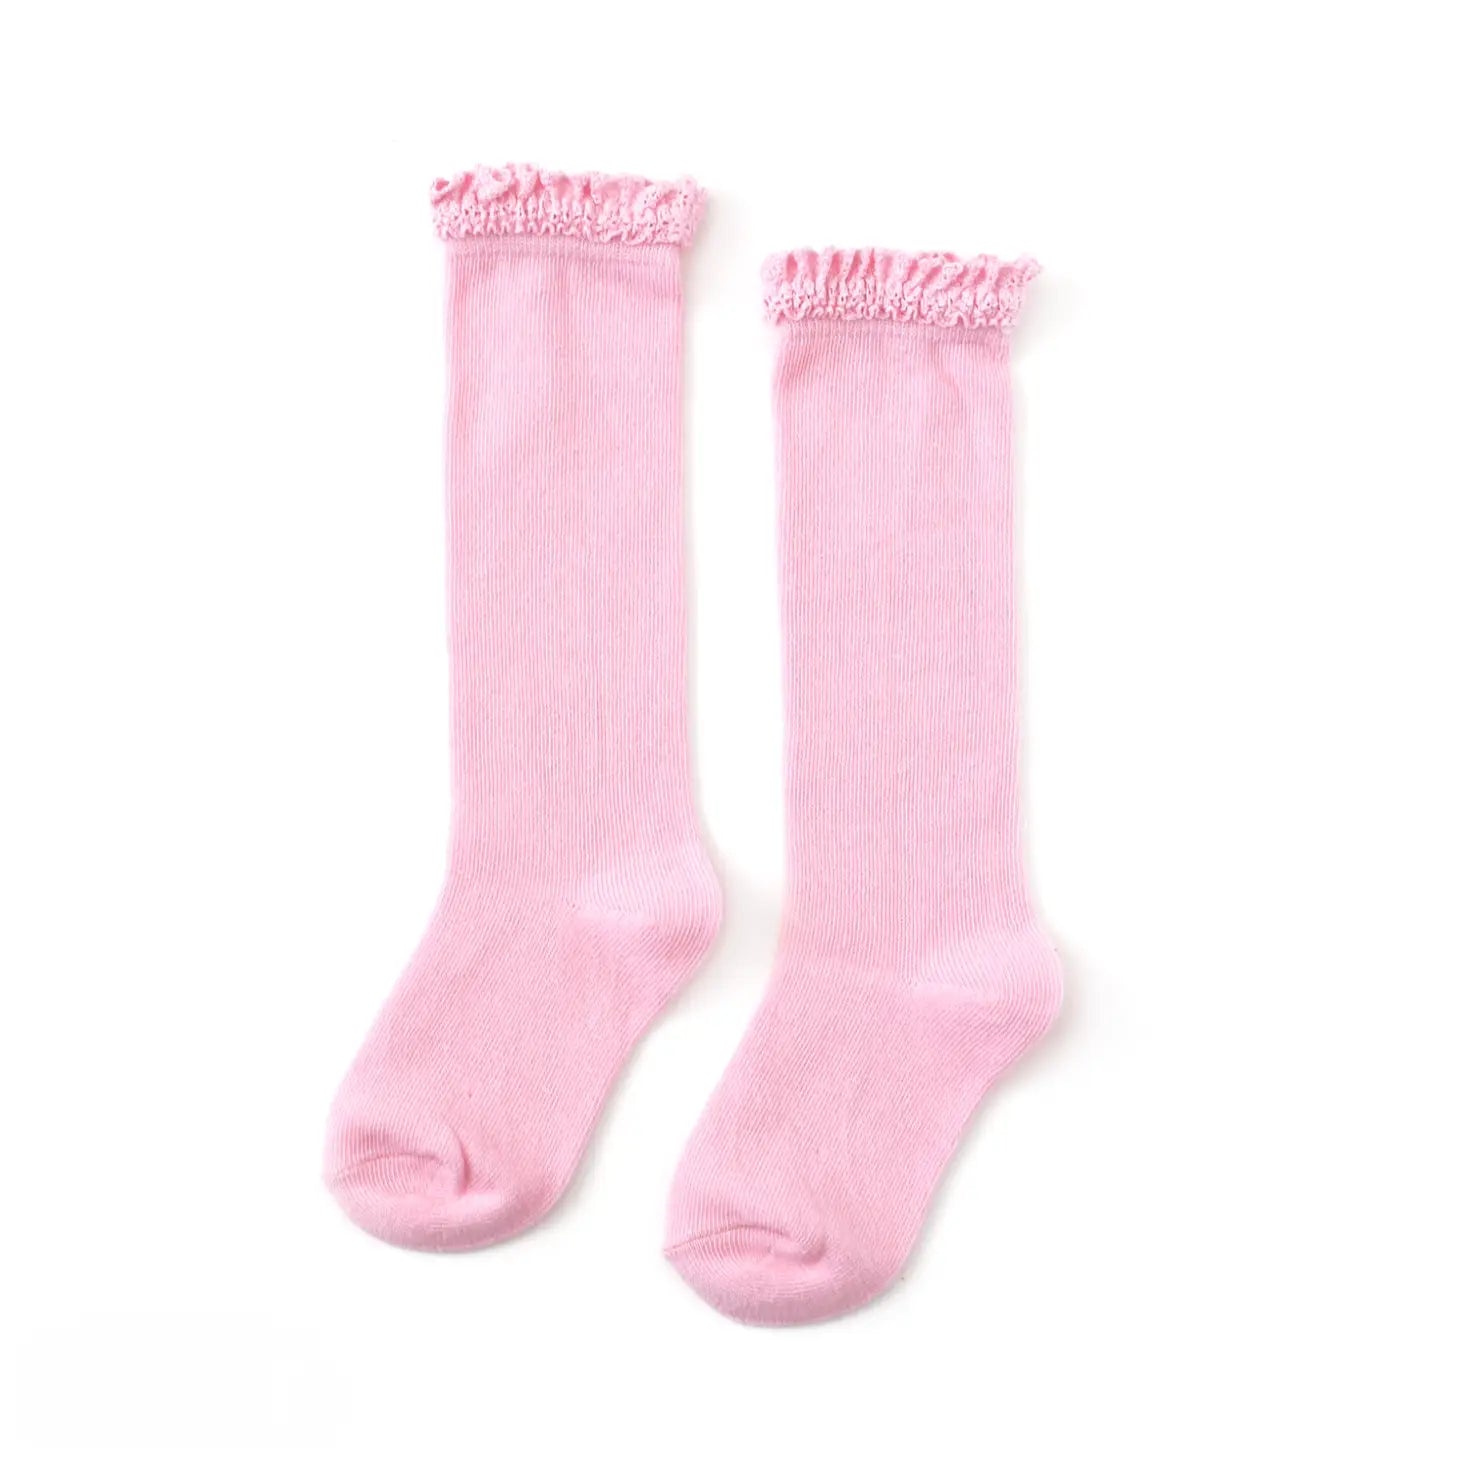 Peony Pink Lace Top Knee High Socks